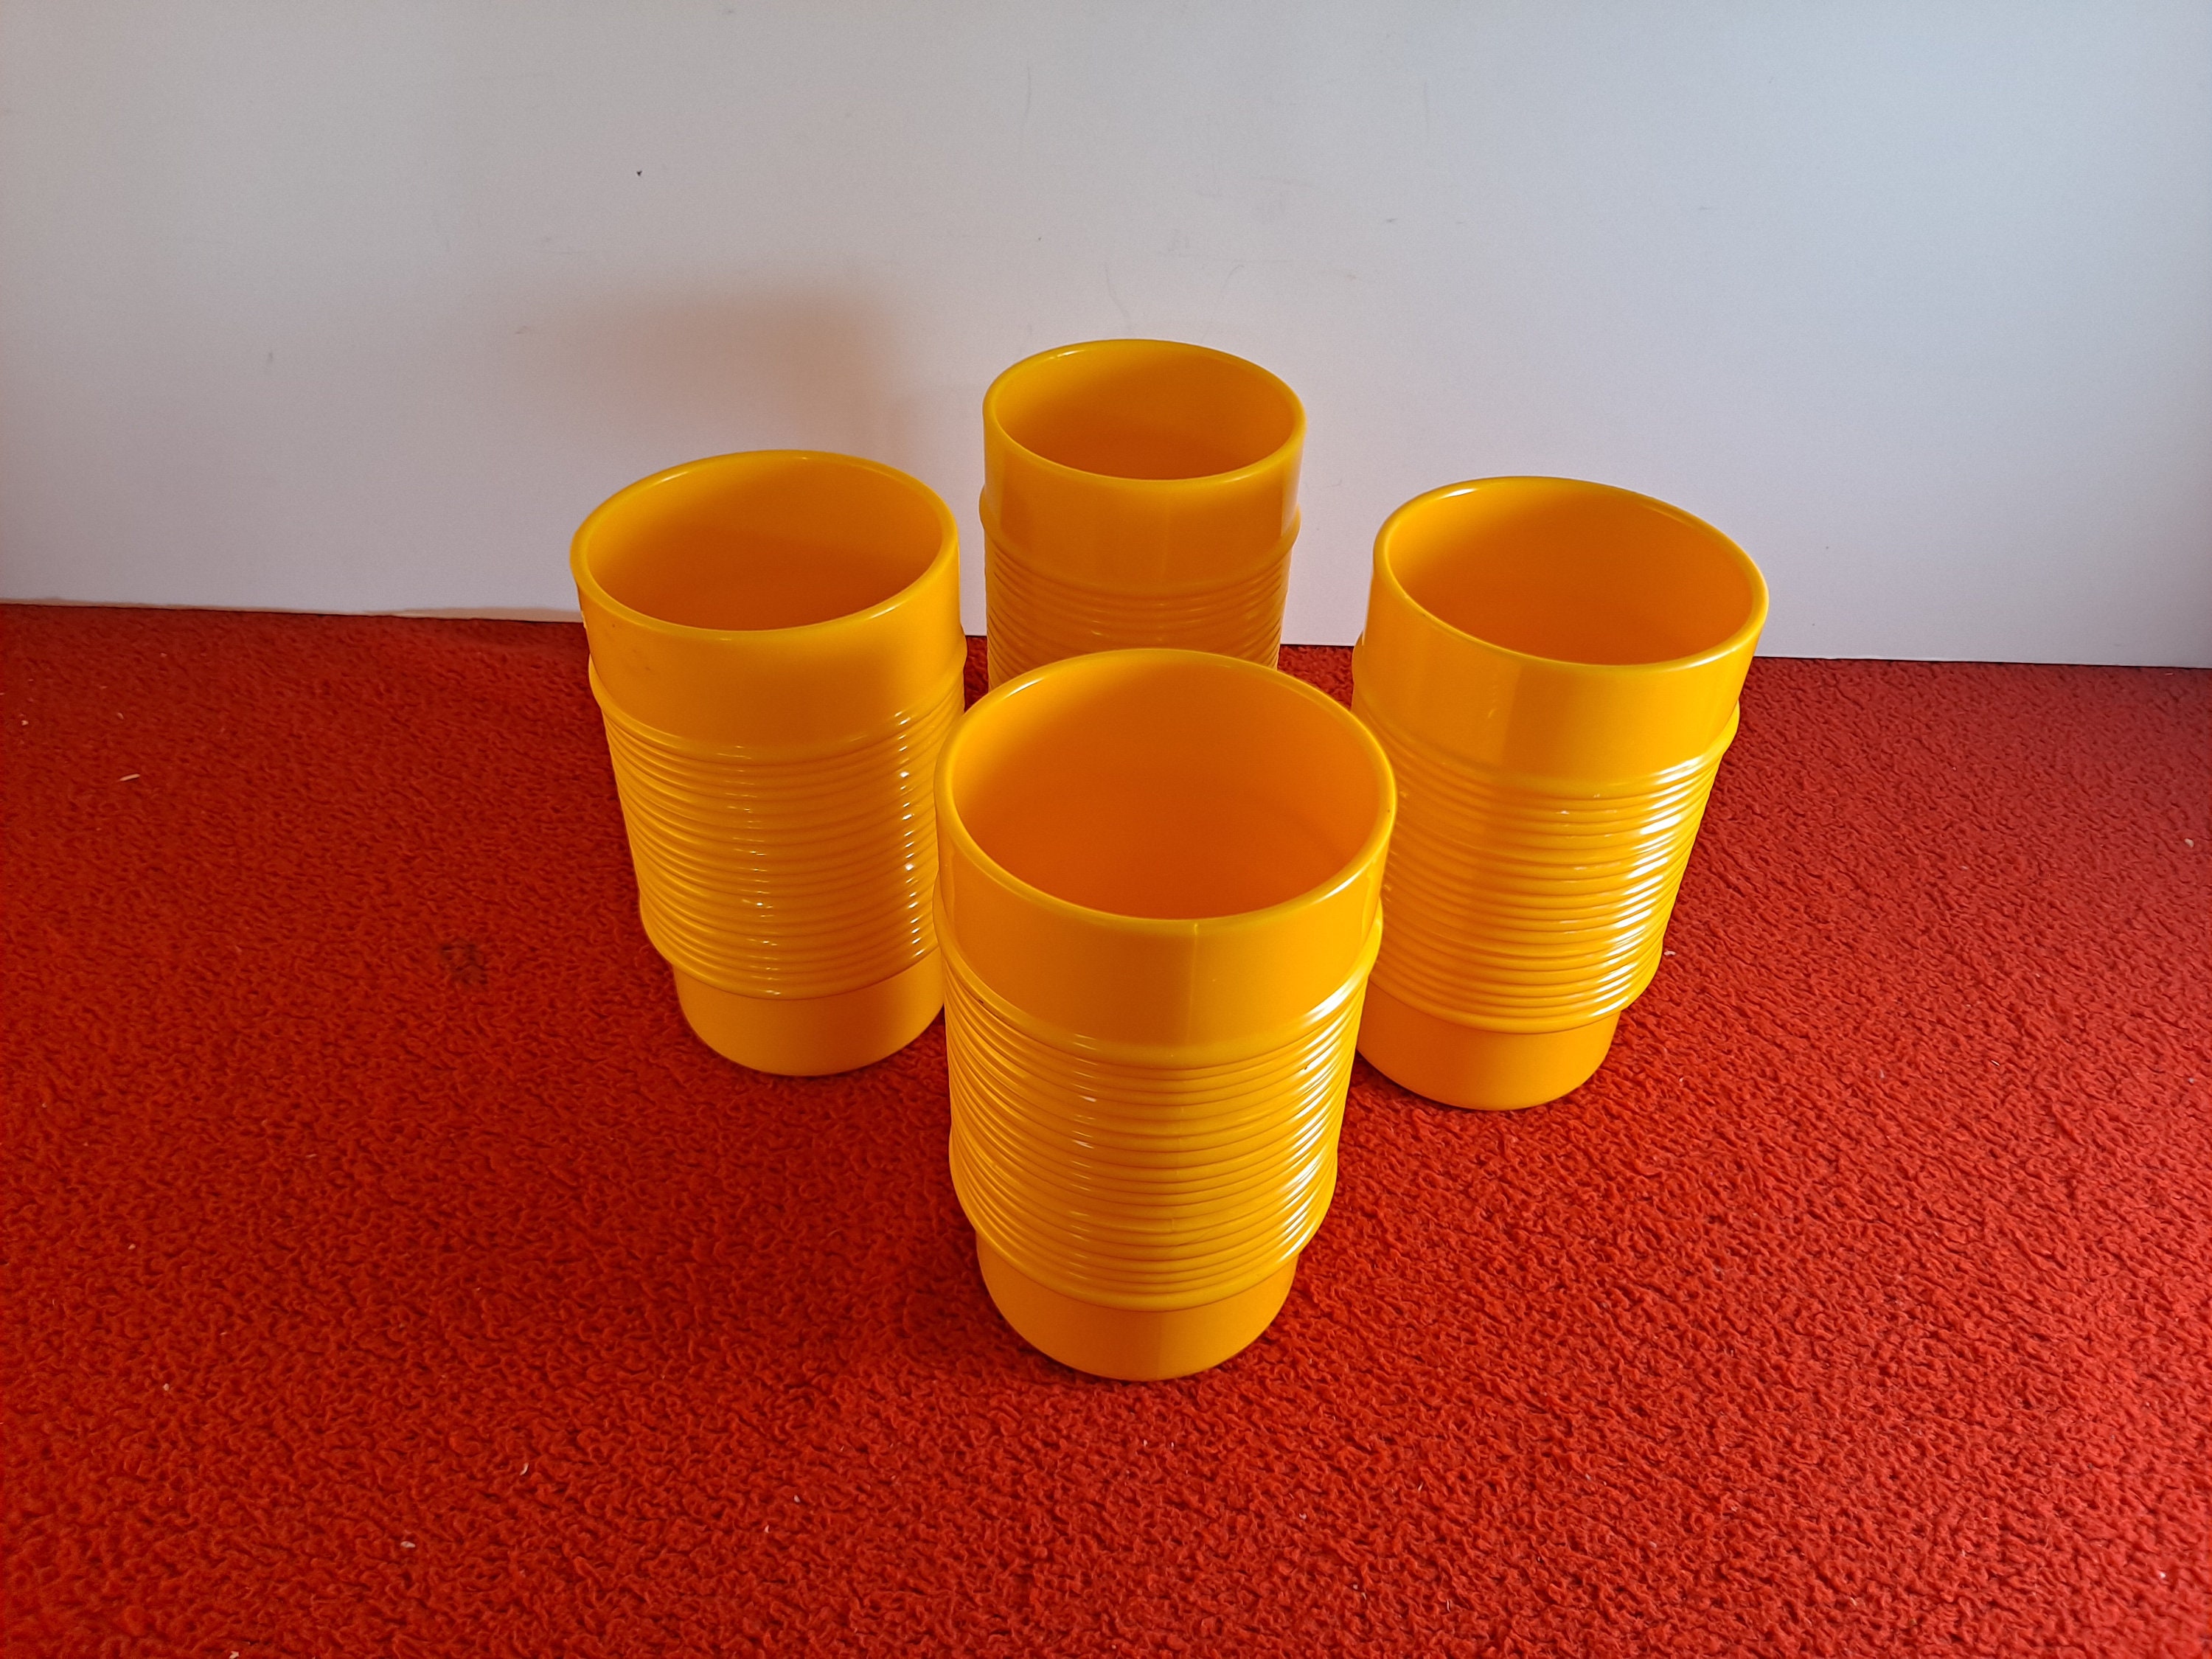 Vintage Rubbermaid Retro Orange 6 Cup Measuring Cup Baker Baking